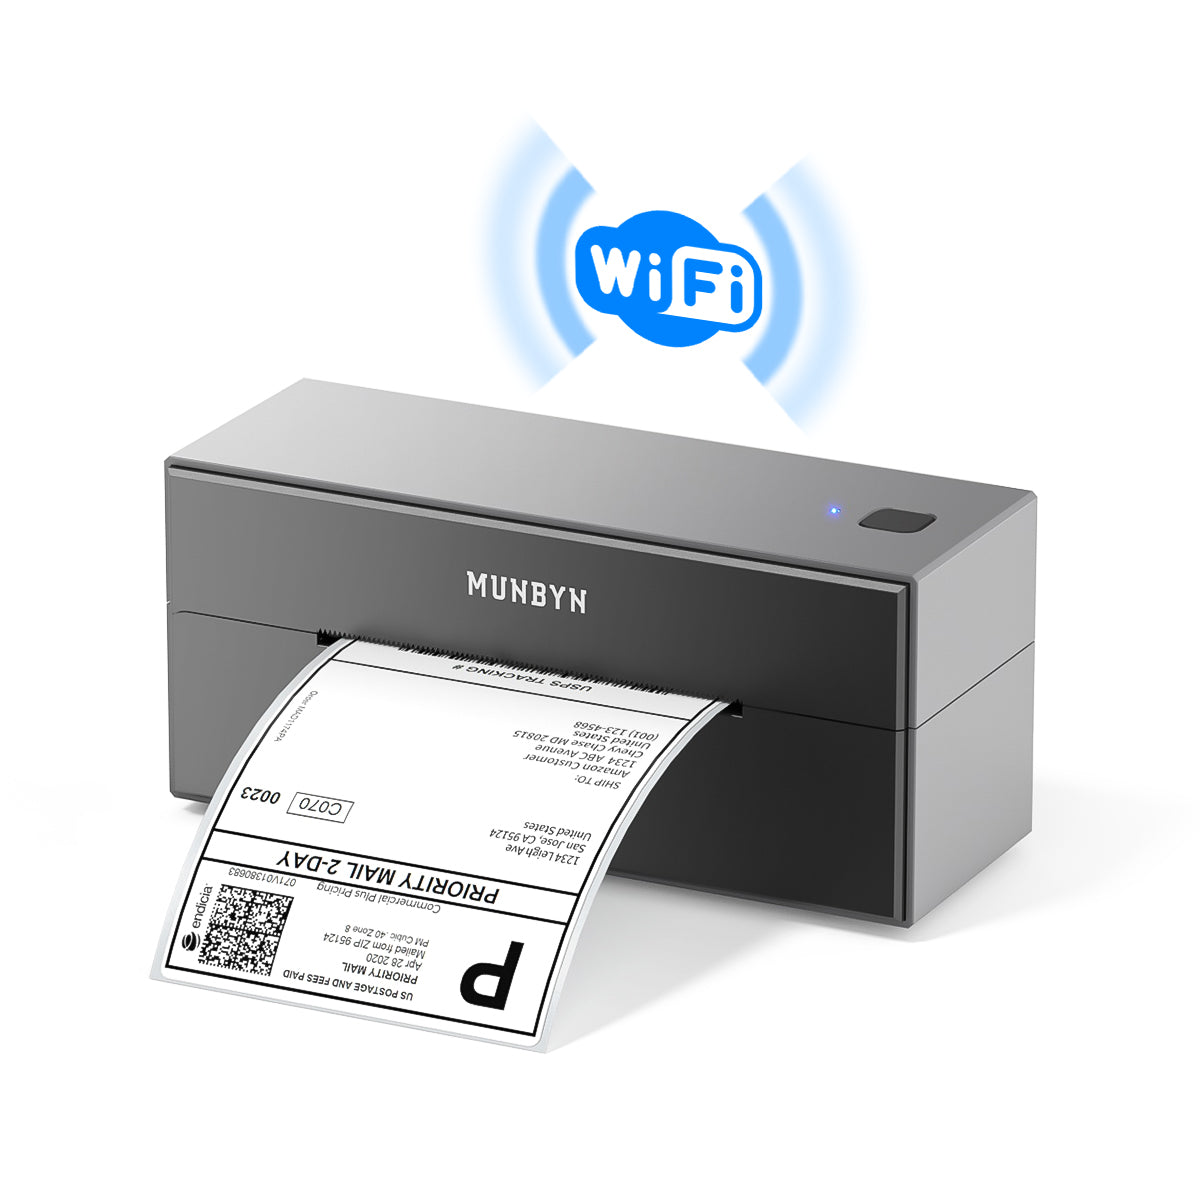 MUNBYN Wireless Shipping Label Printer P129S